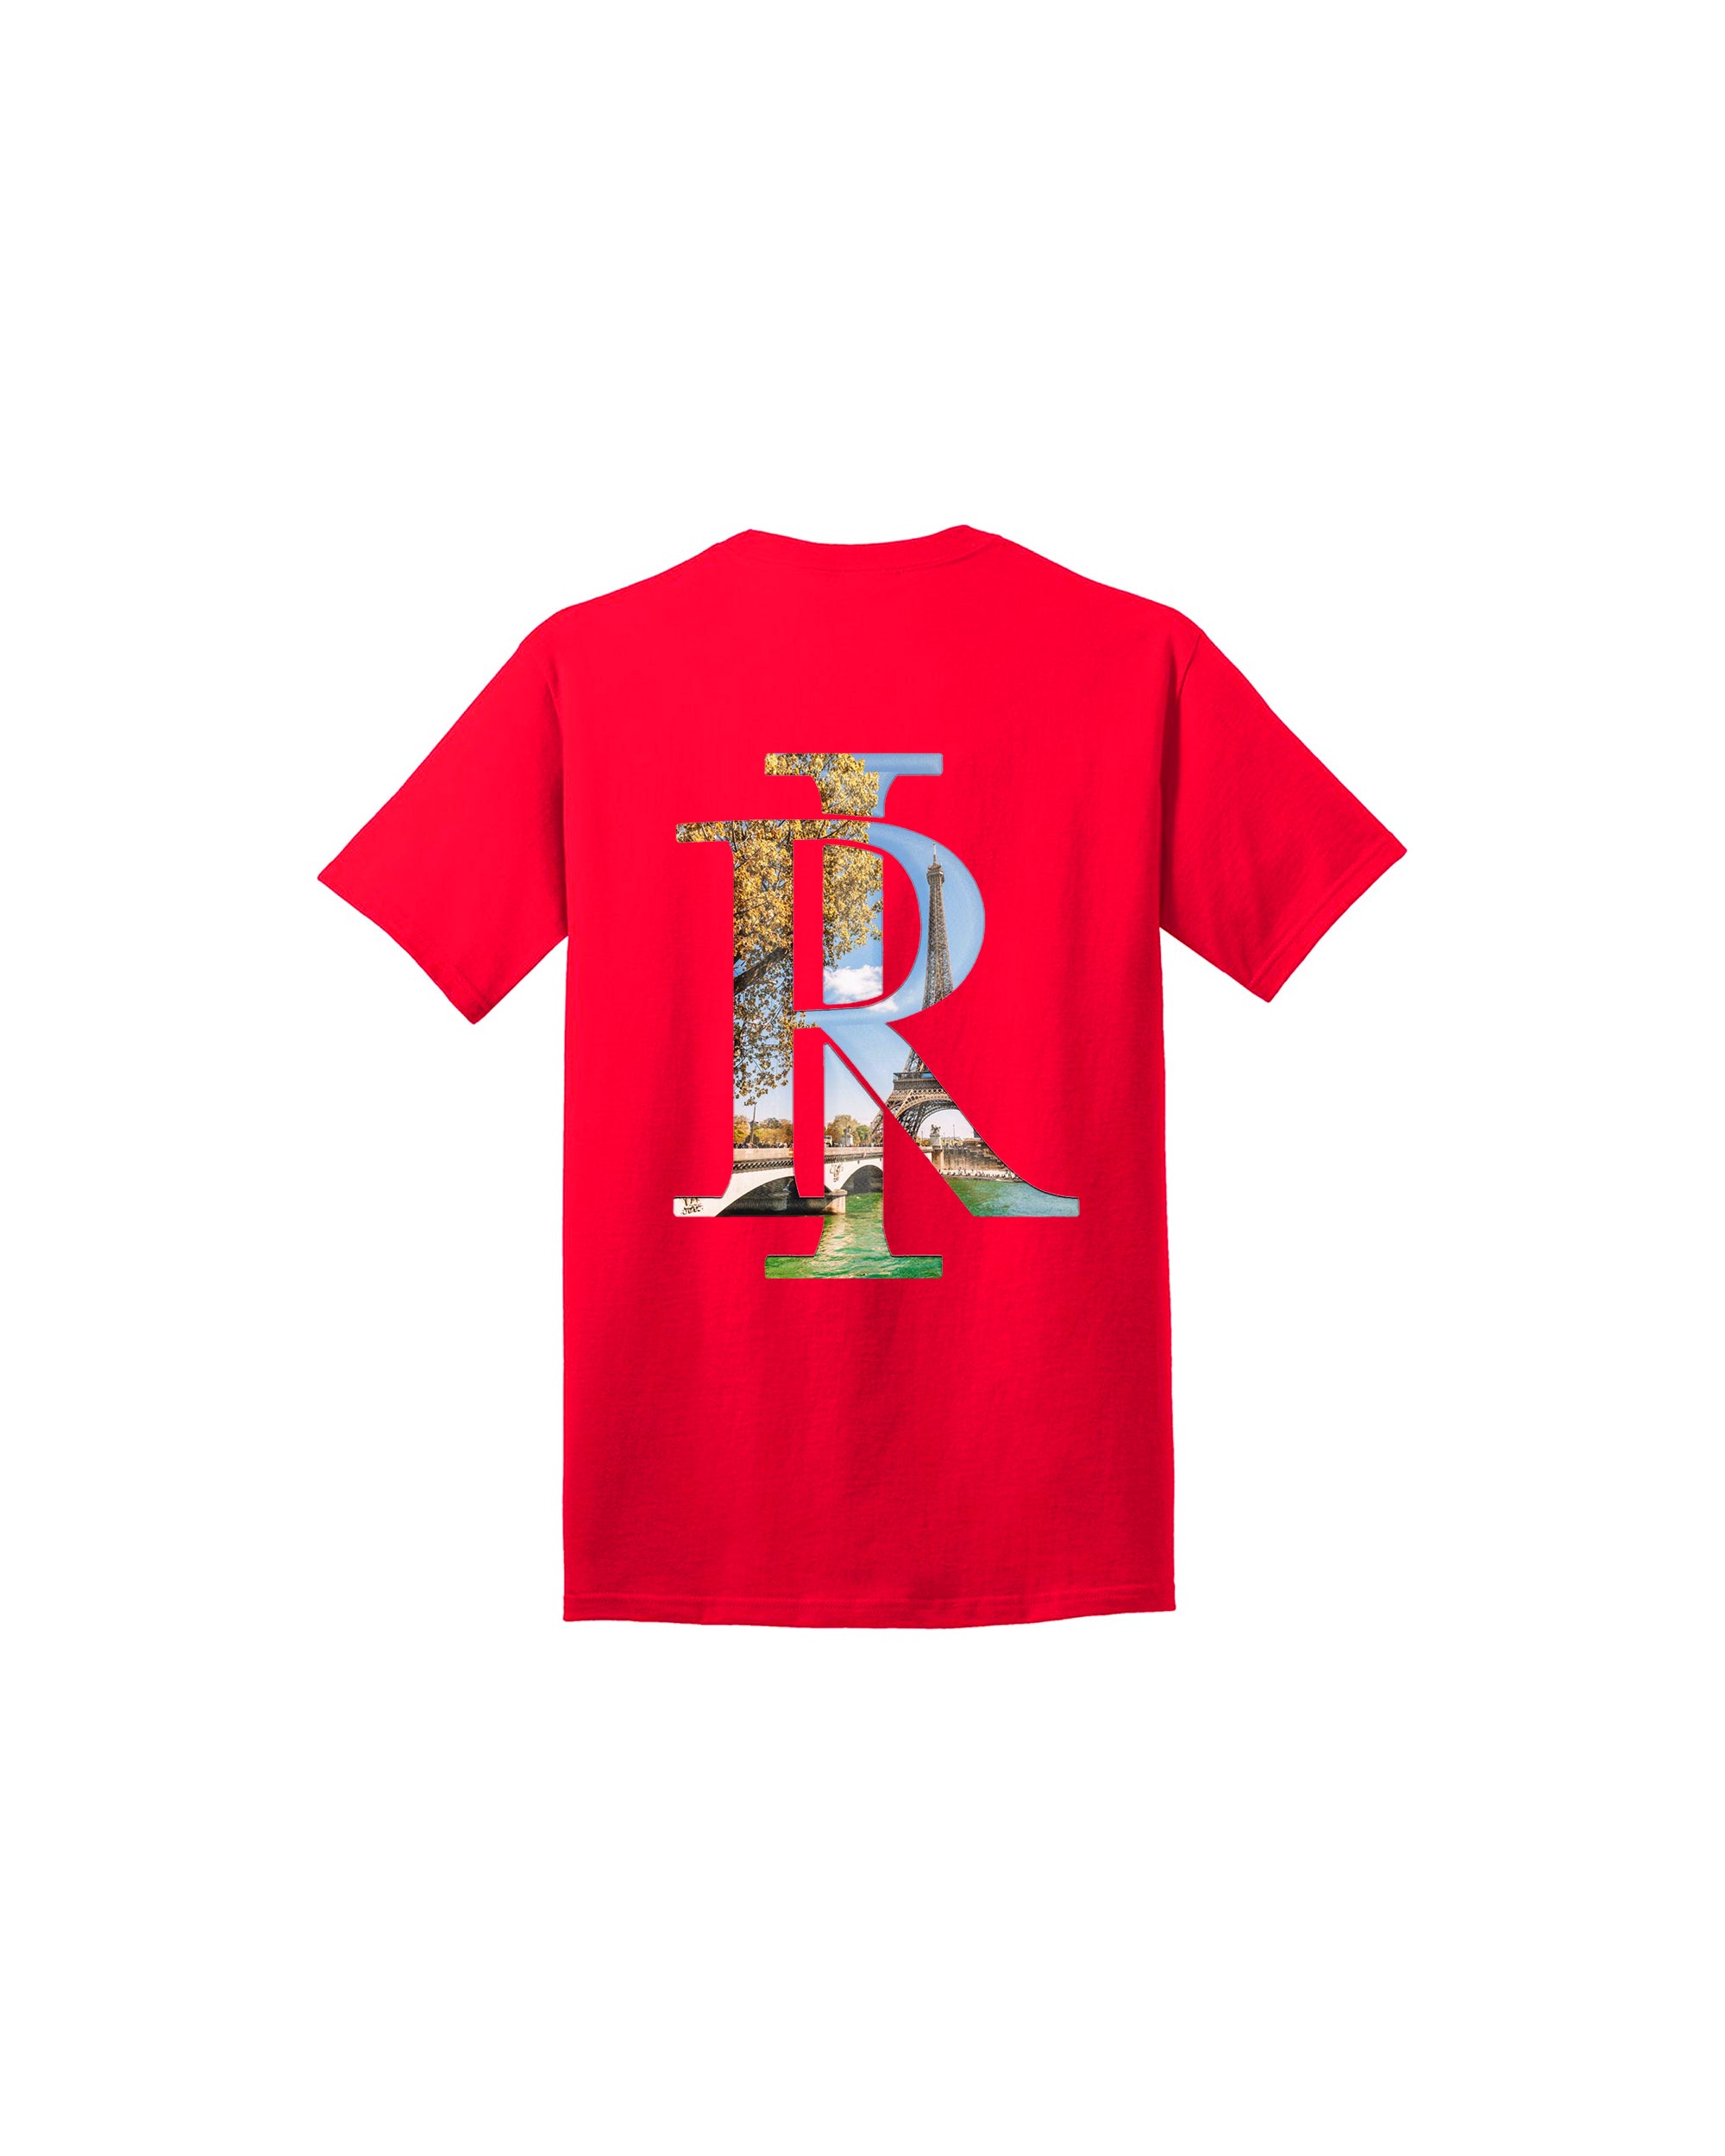 Racks Collar T-Shirt - Red